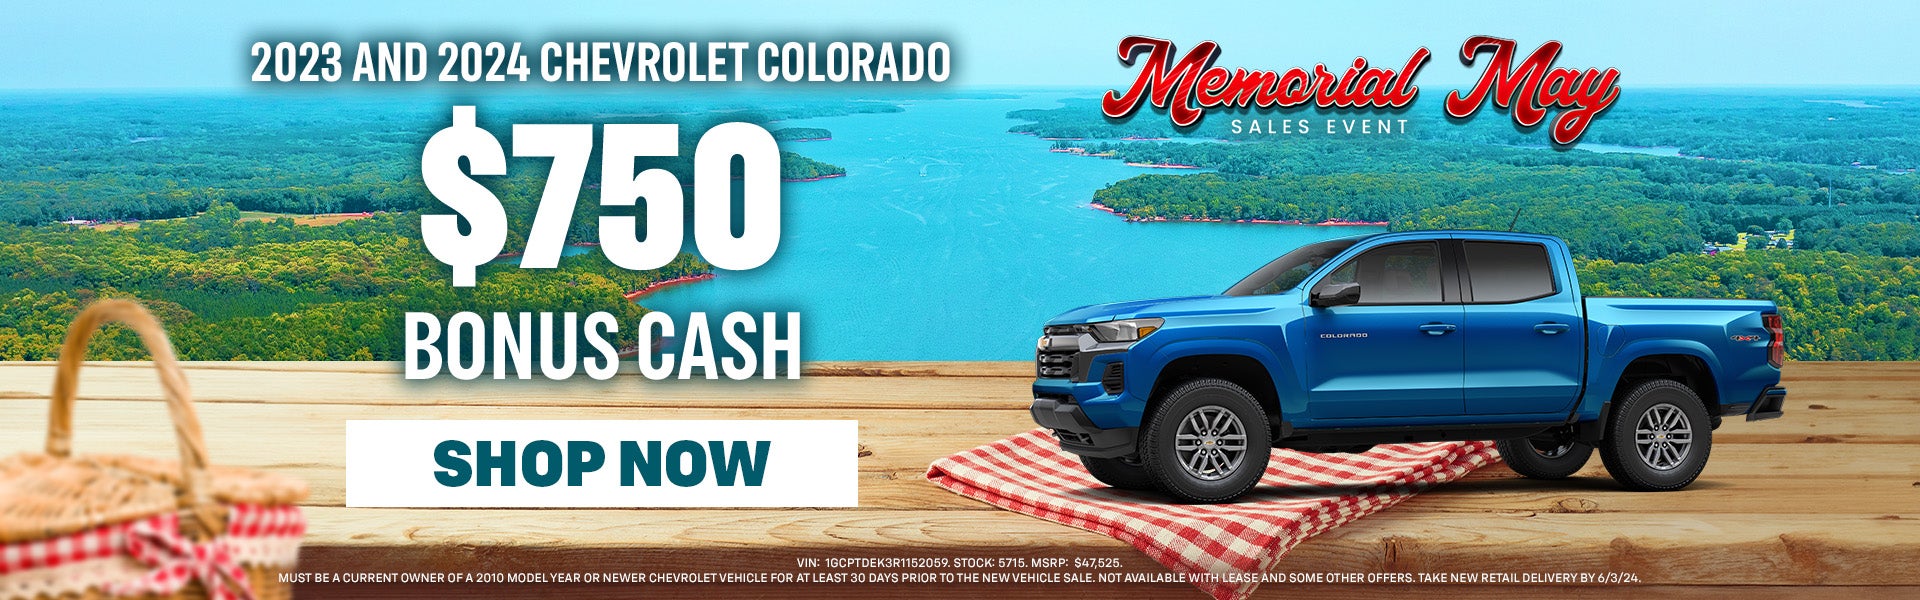 $750 bonus cash on 2023-2024 Chevy Colorado